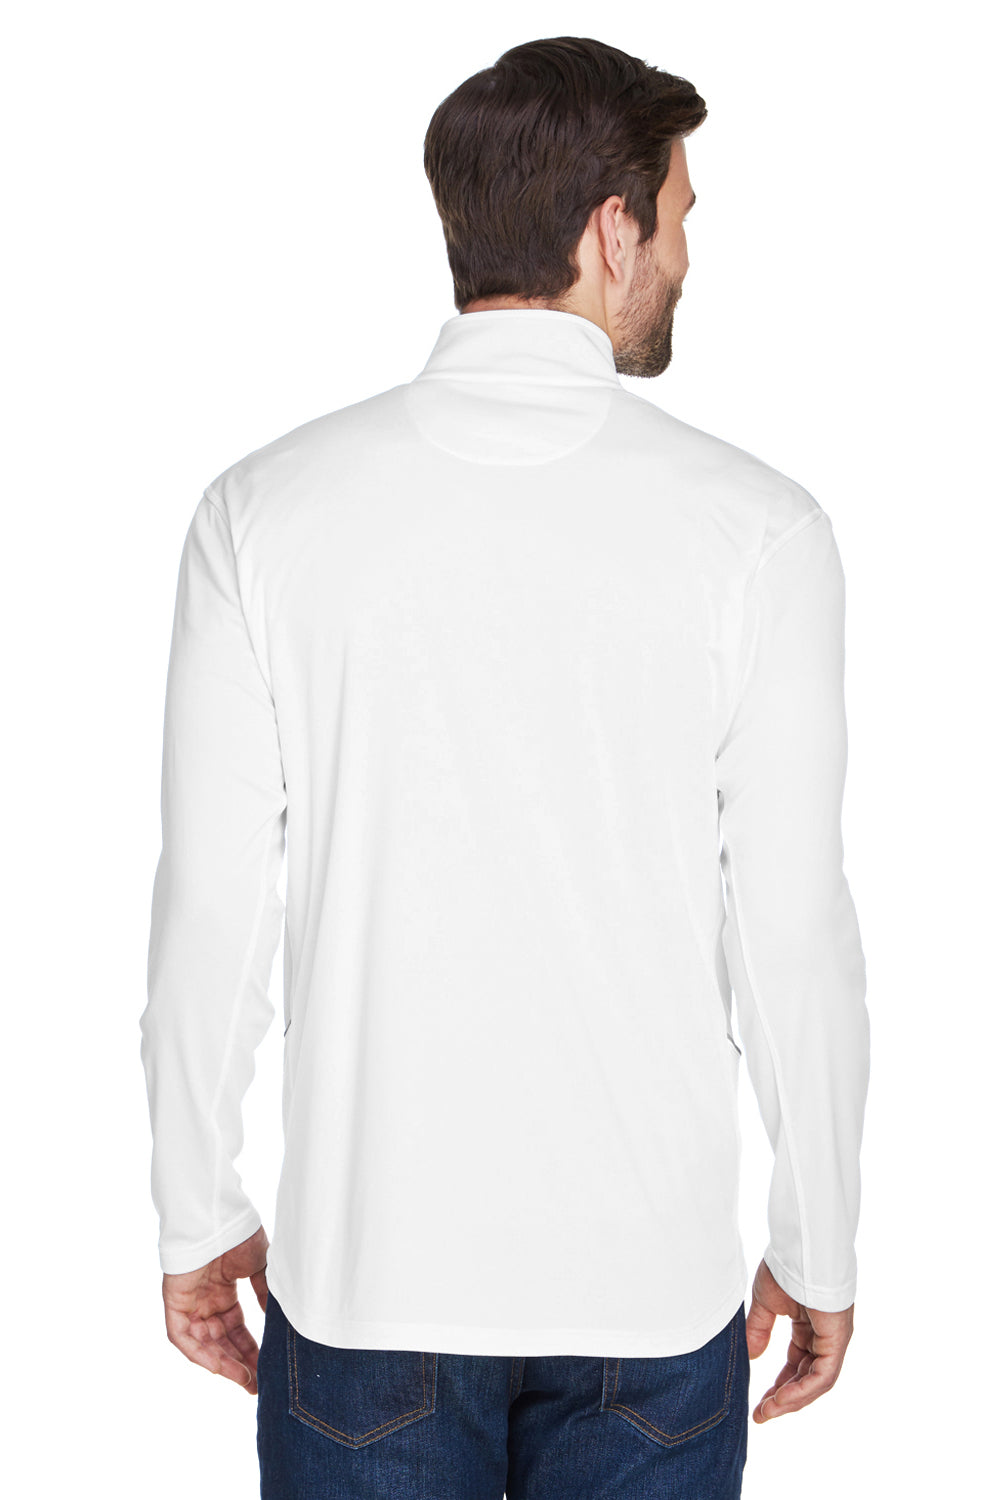 UltraClub 8230 Mens Cool & Dry Moisture Wicking 1/4 Zip Sweatshirt White Back